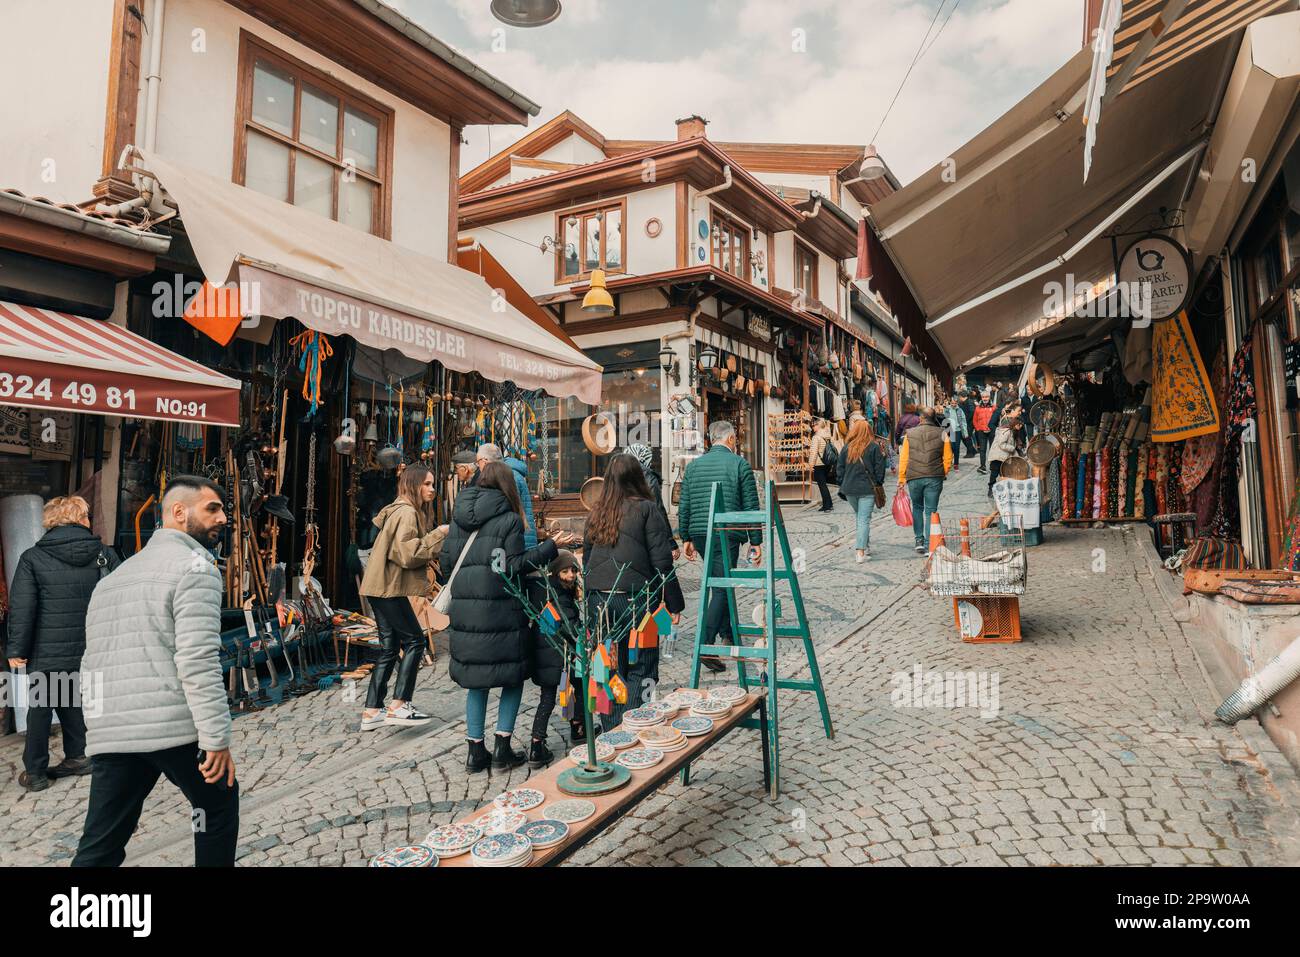 Ankara-Turkey, February 25, 2023: People shopping at the bazaar in Ankara Kaleici, old settlement area inside Ankara Castle. Famous ancient wooden hou Stock Photo